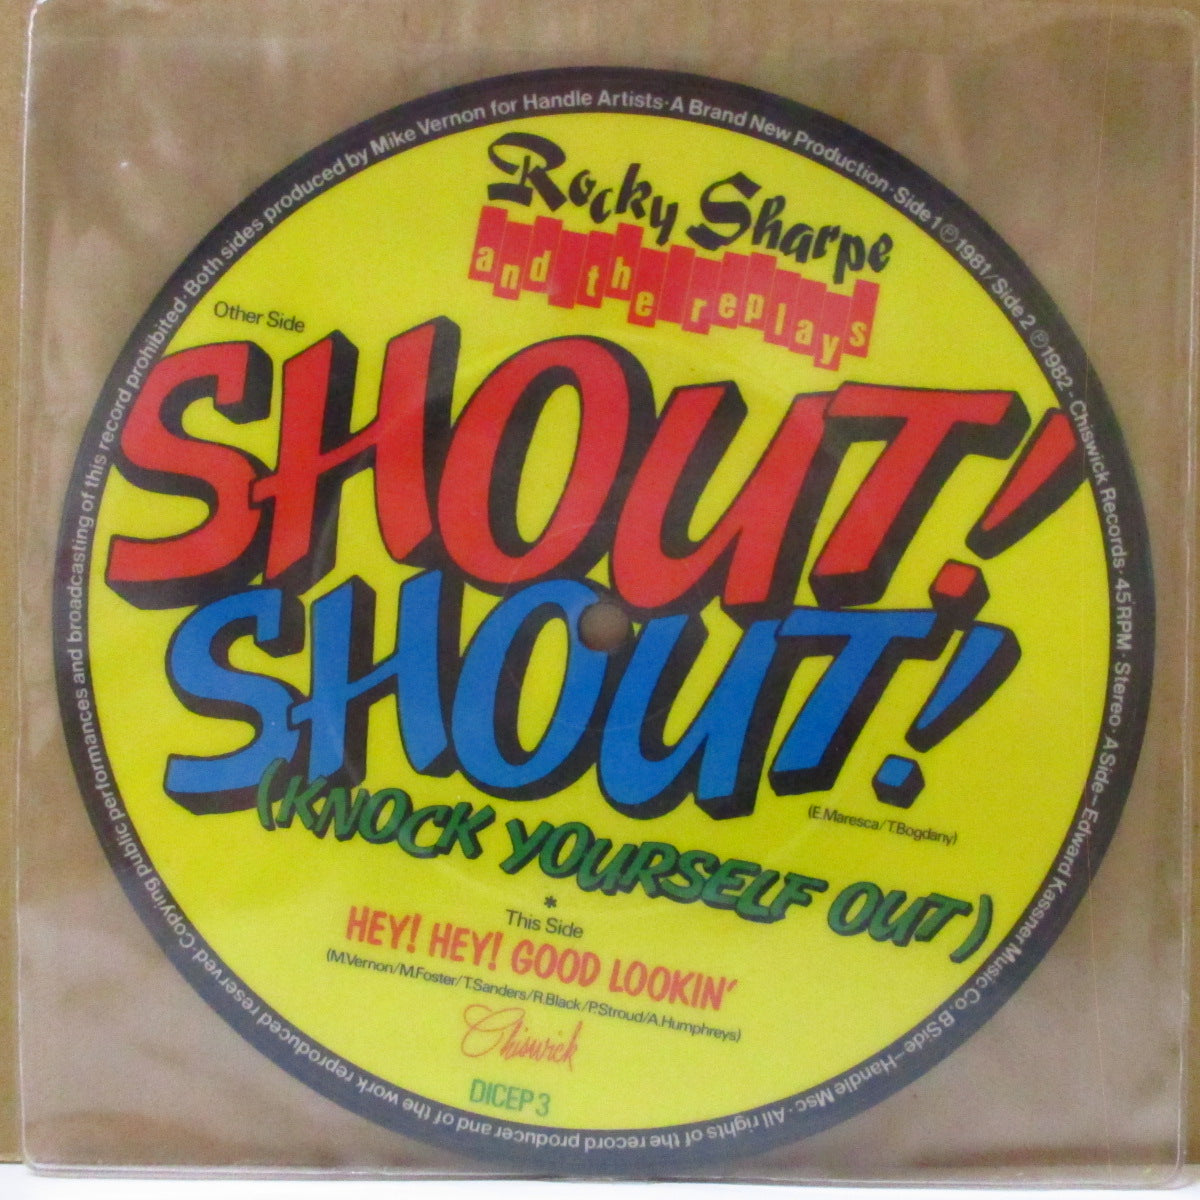 ROCKY SHARPE & THE REPLAYS (ロッキー・シャープ&ザ・リプレイズ)  - Shout! Shout! (UK 限定ピクチャー 7インチ+PVC)